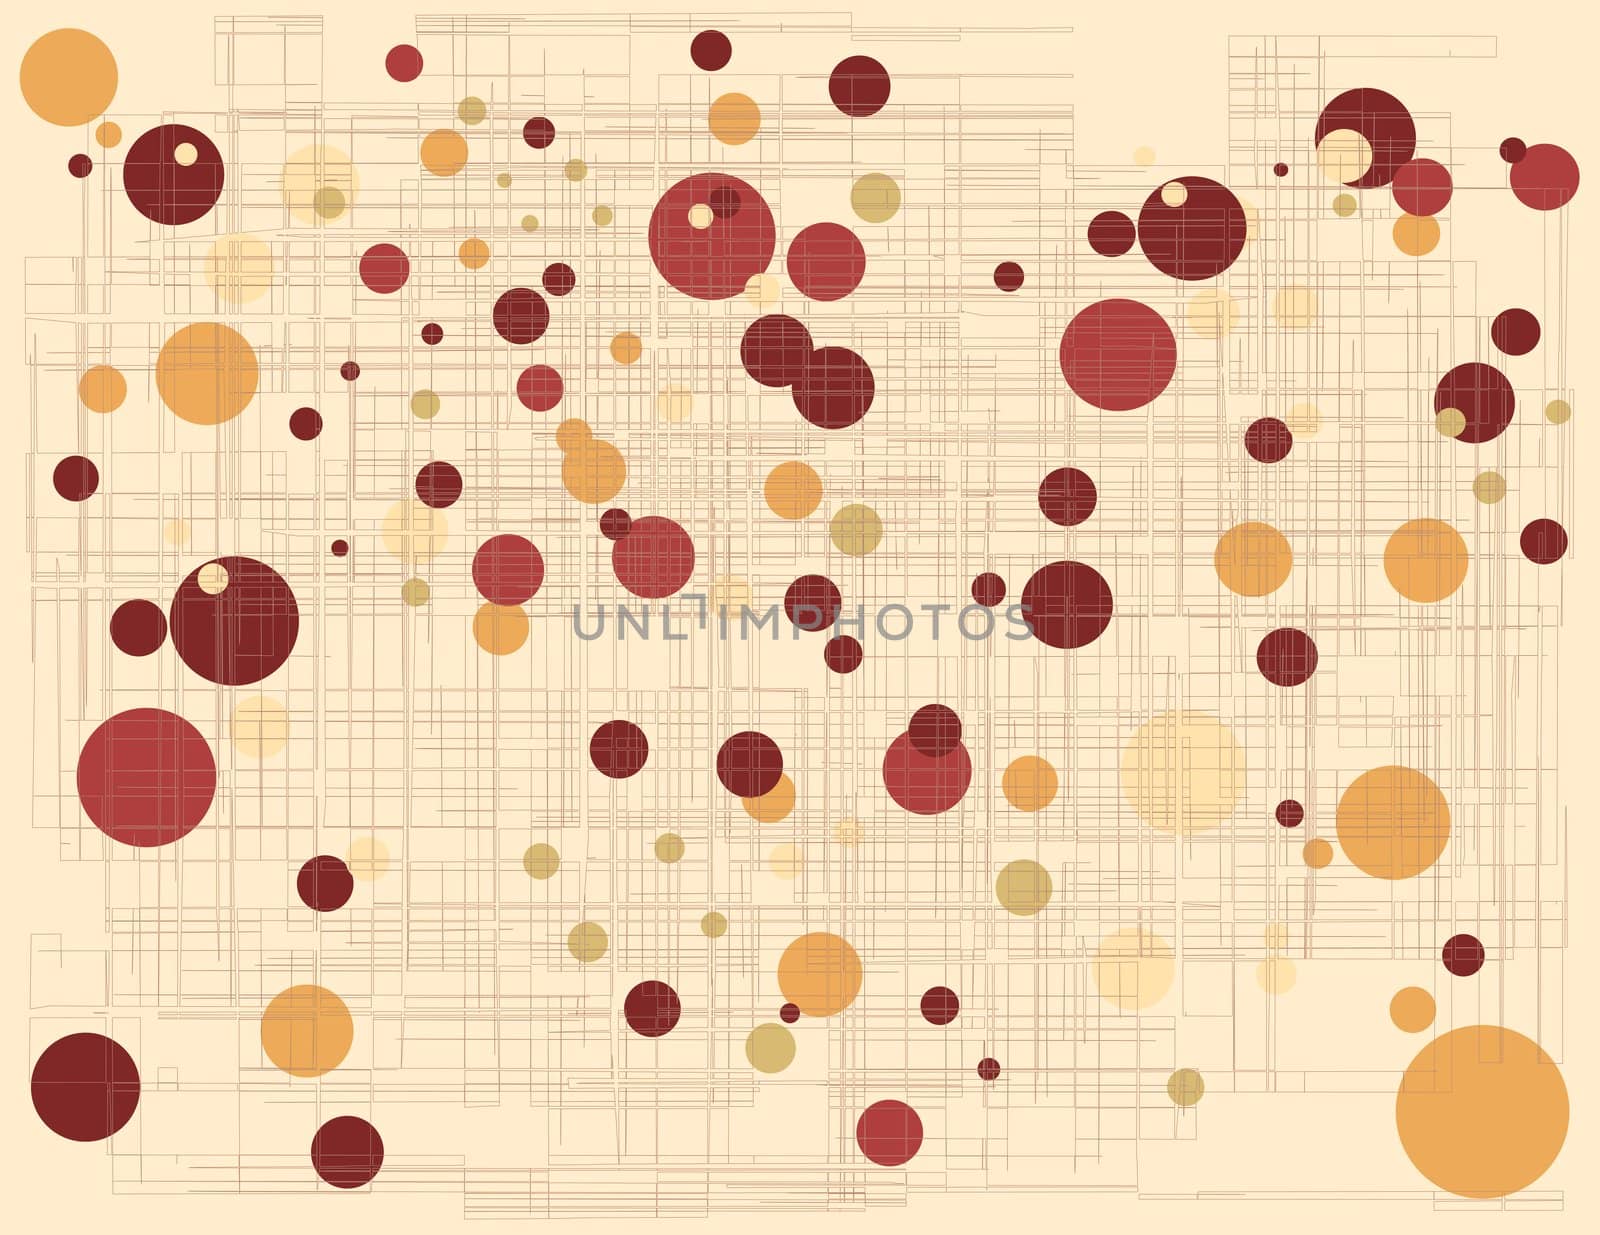 Seamless dots background by Lirch